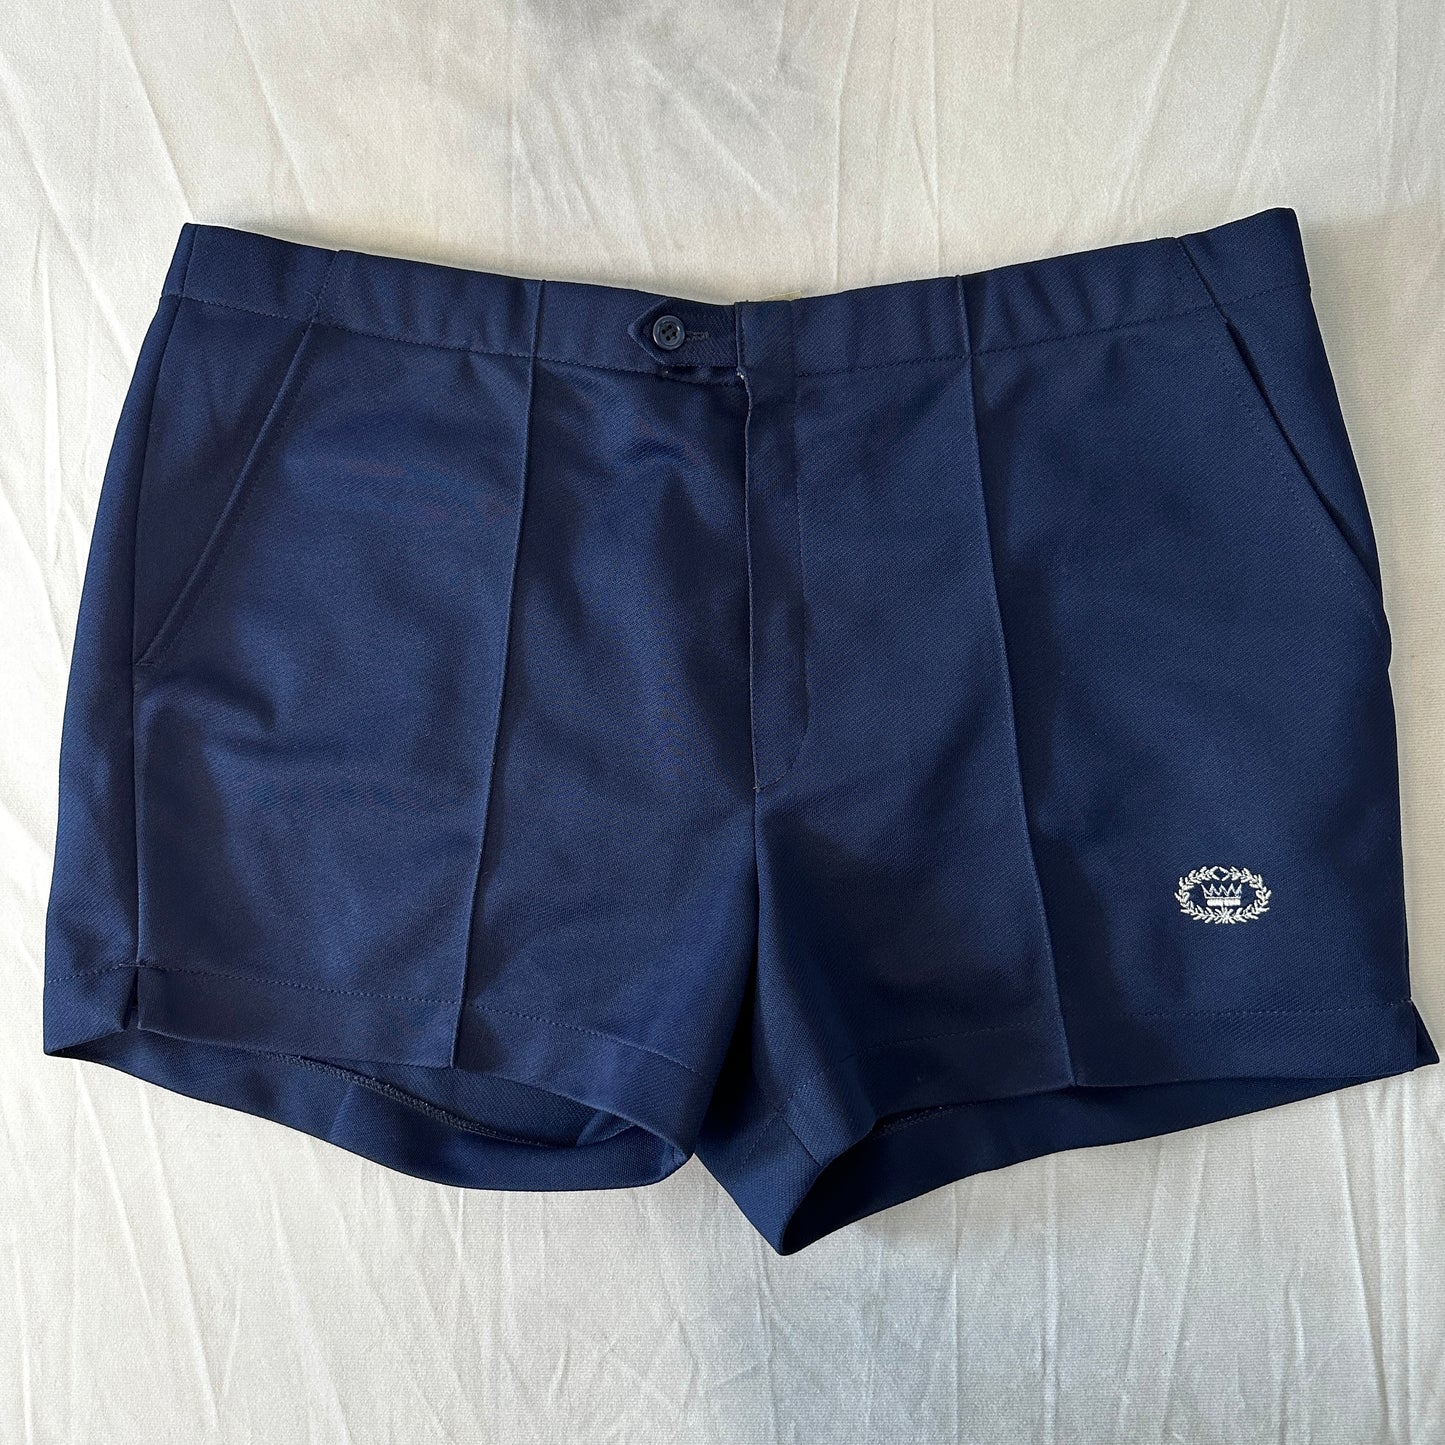 Trevois Vintage 80s Tennis Shorts - XL